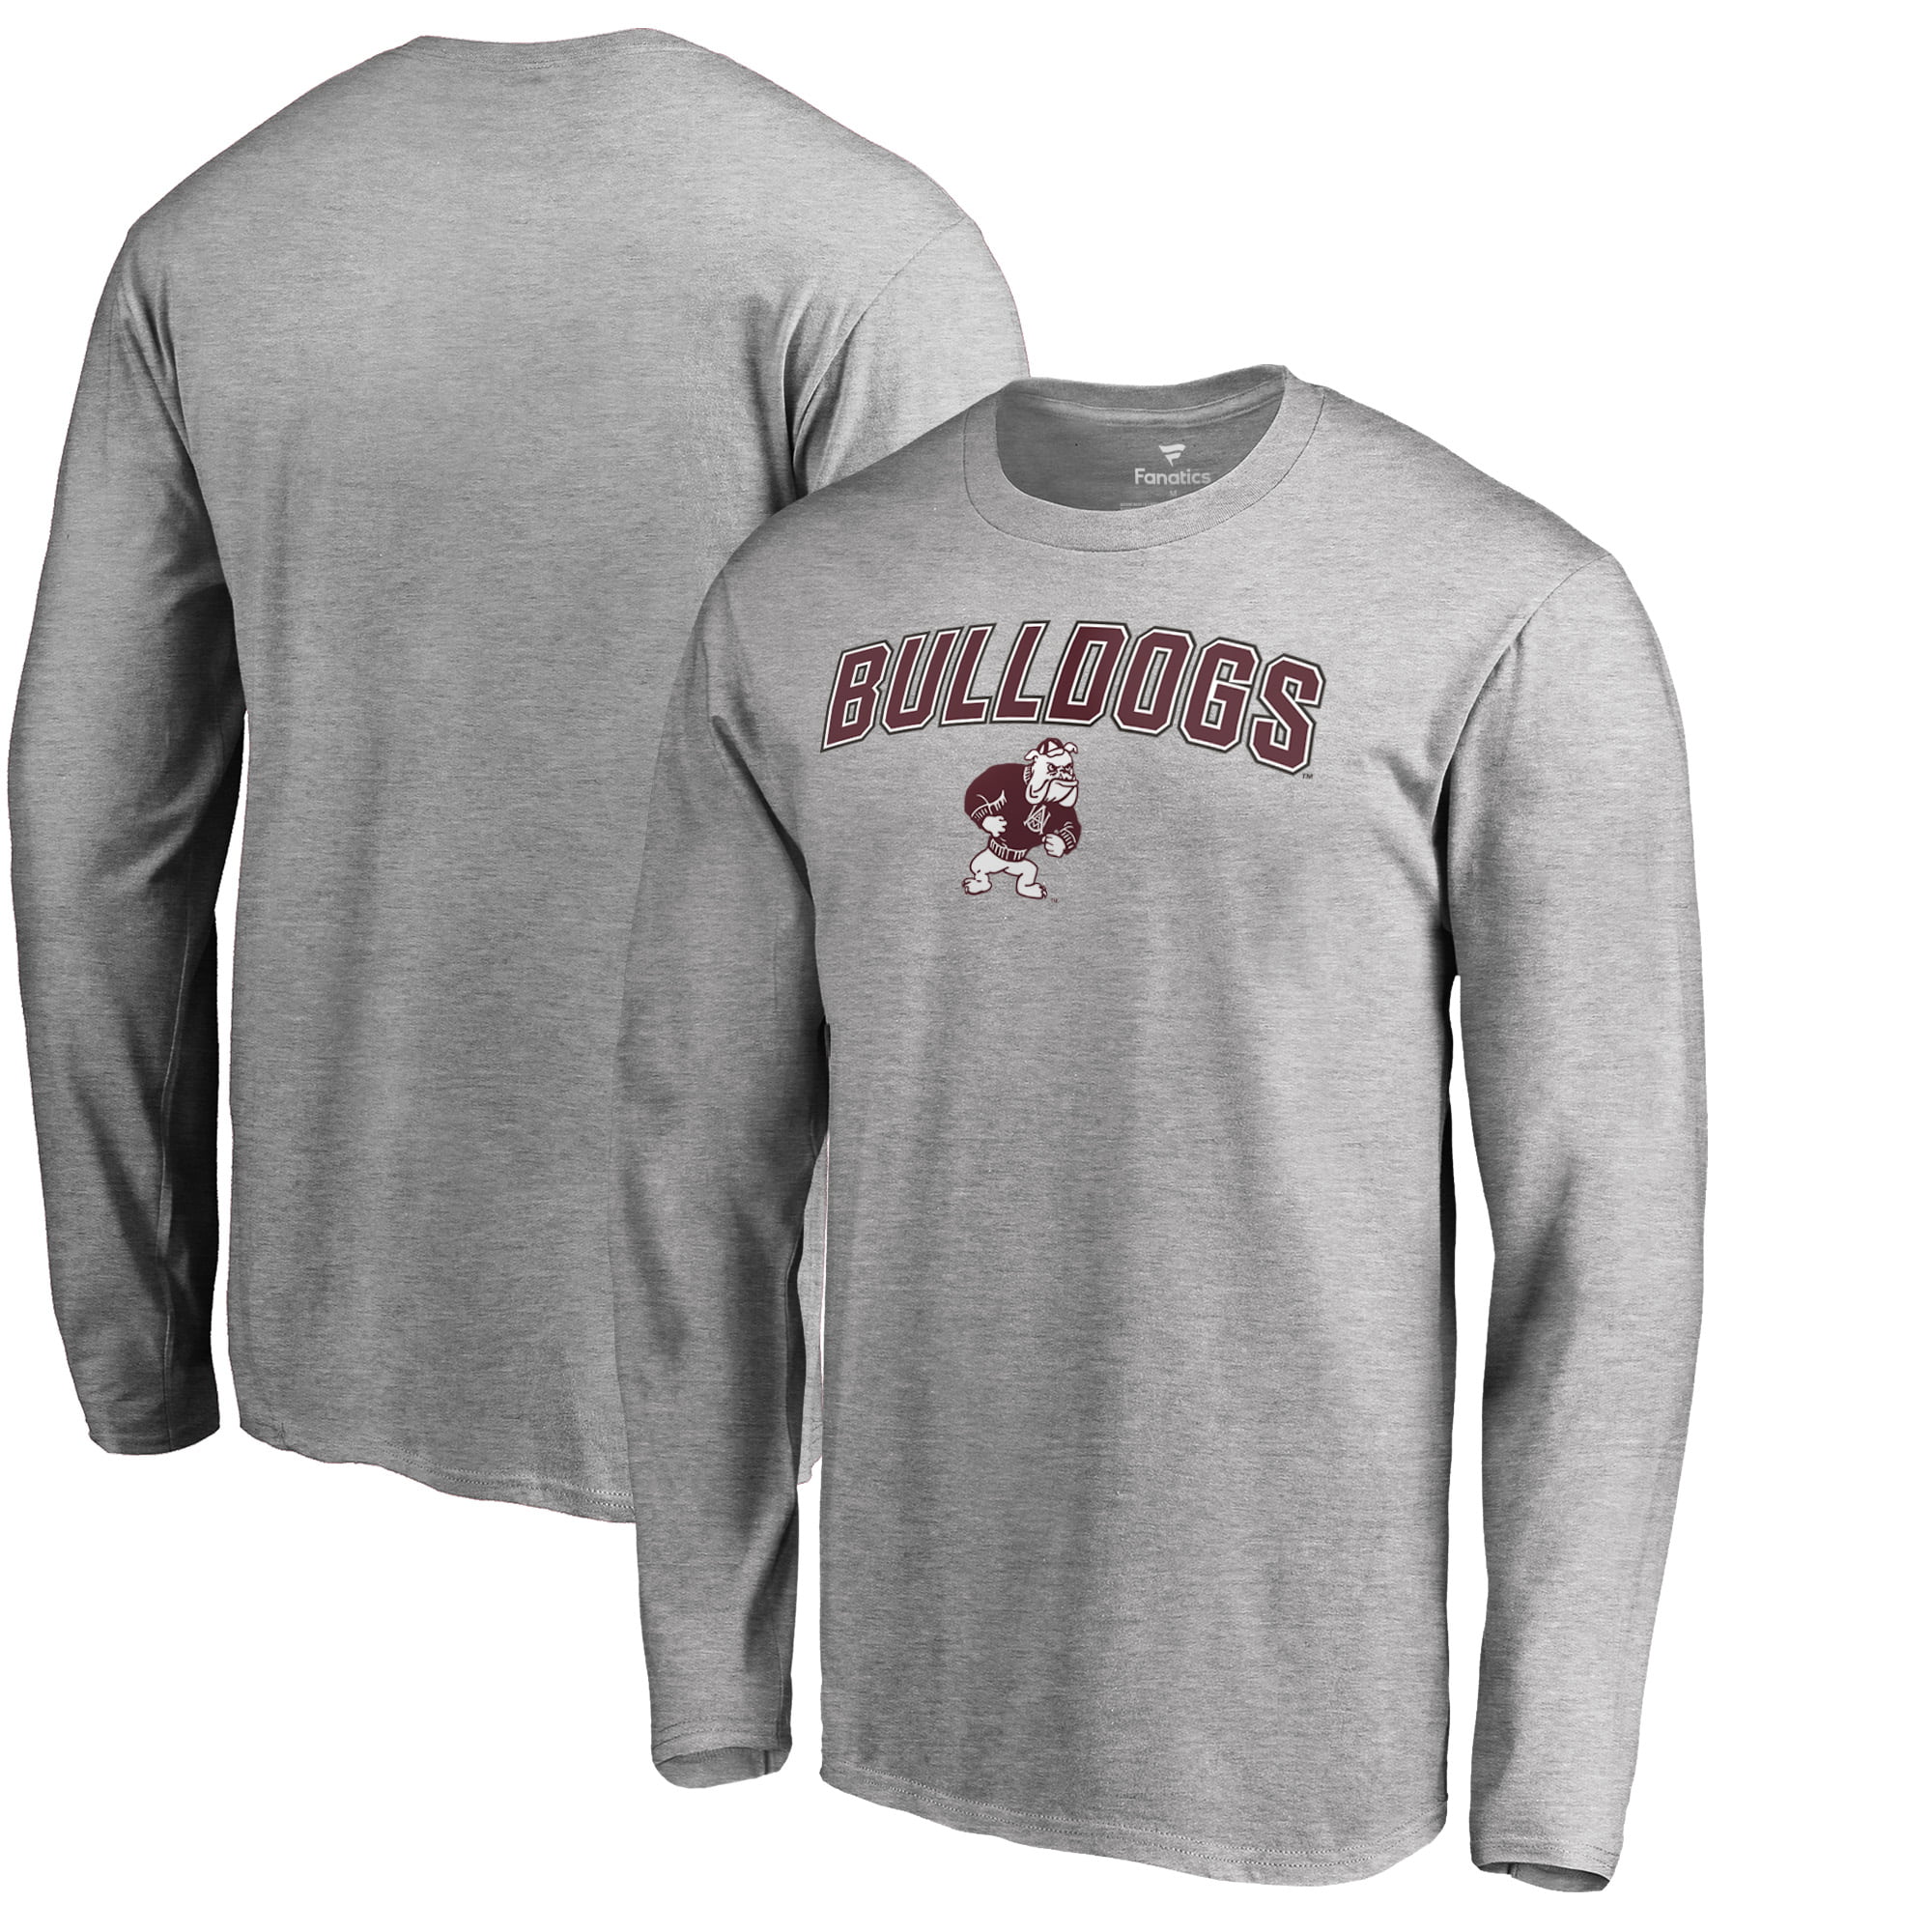 Alabama A&M Bulldogs Proud Mascot Long Sleeve T-Shirt - Ash - Walmart.com